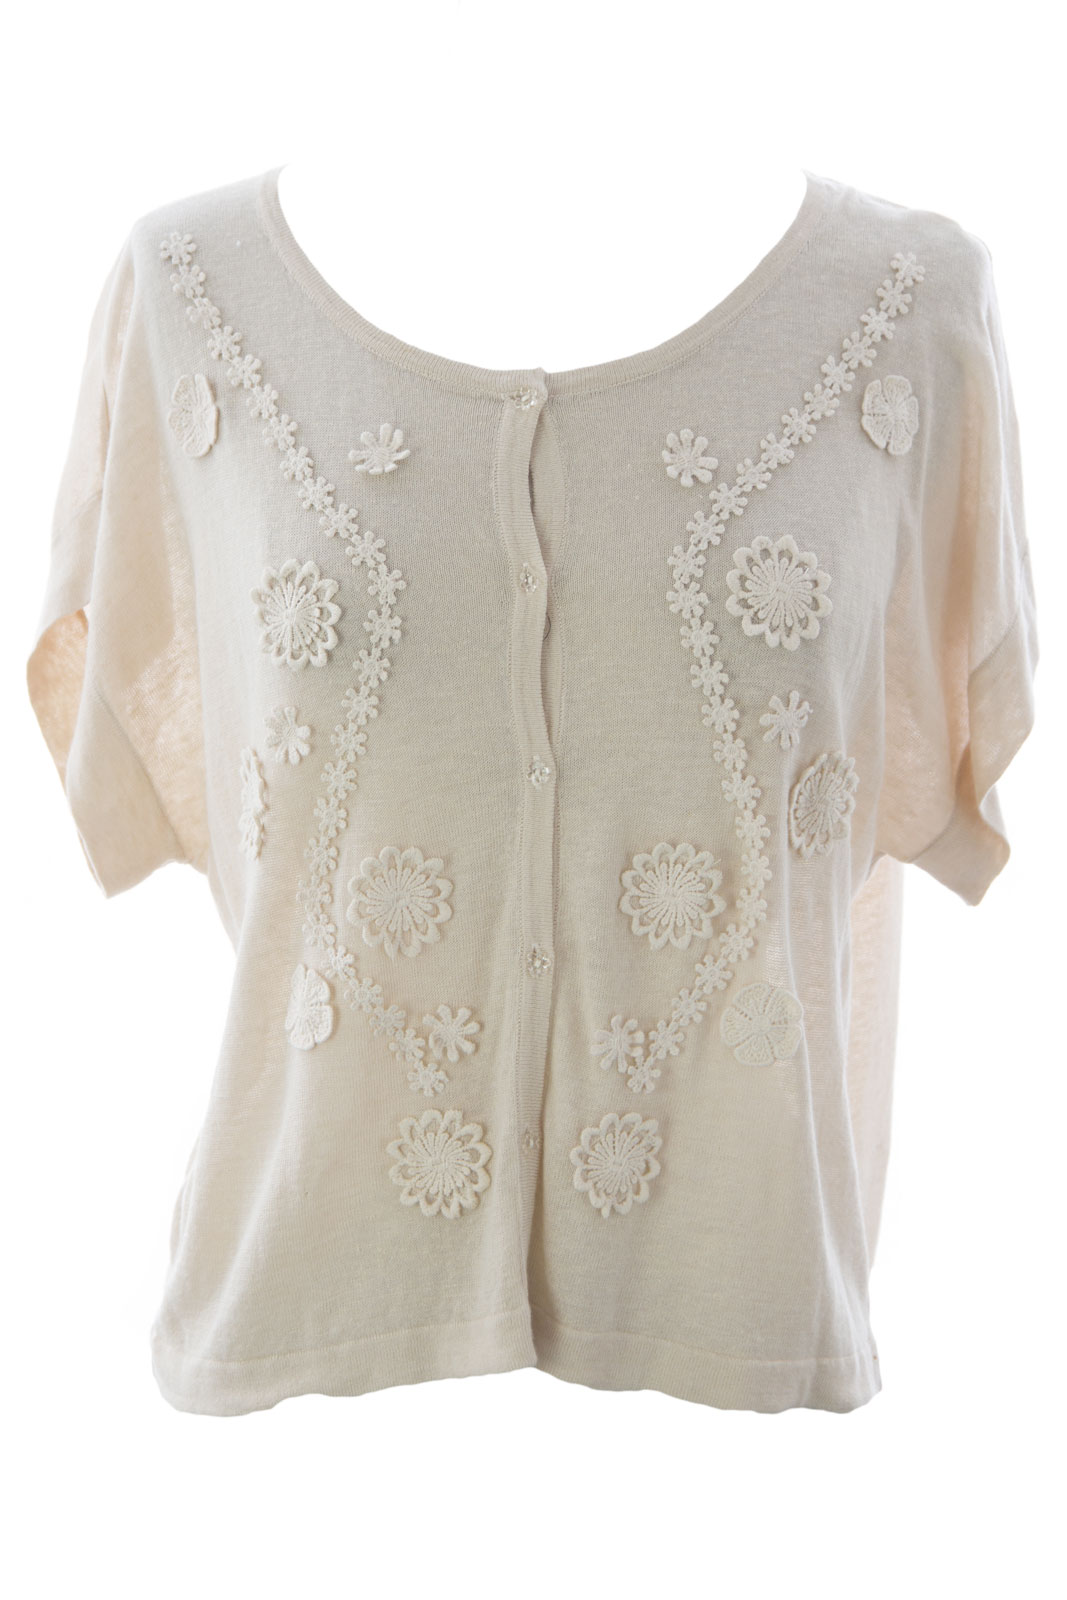 August Silk Women's Floral Knit Short Sleeve Cardigan NWT $68 | eBay